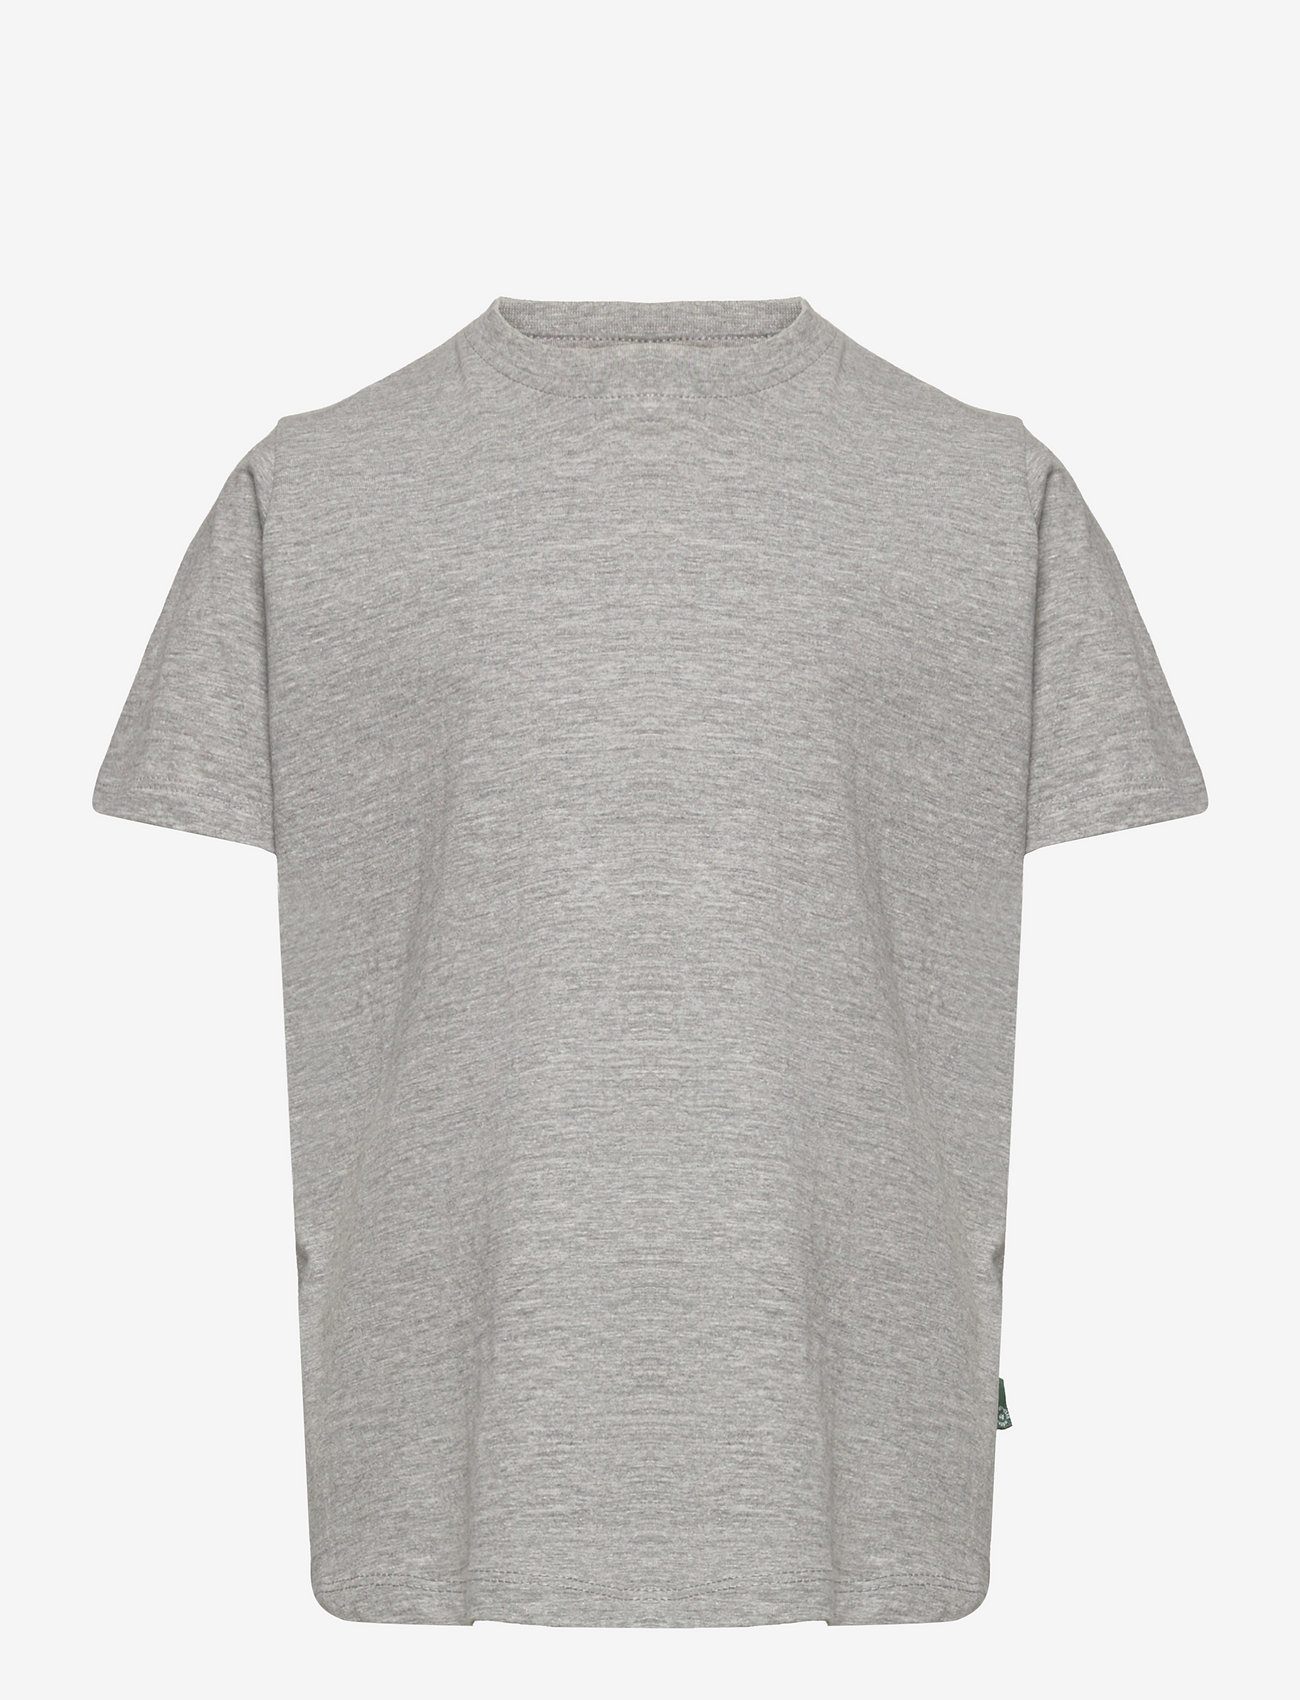 Kronstadt - Timmi Kids Organic/Recycled t-shirt - lühikeste varrukatega t-särgid - grey mel - 0